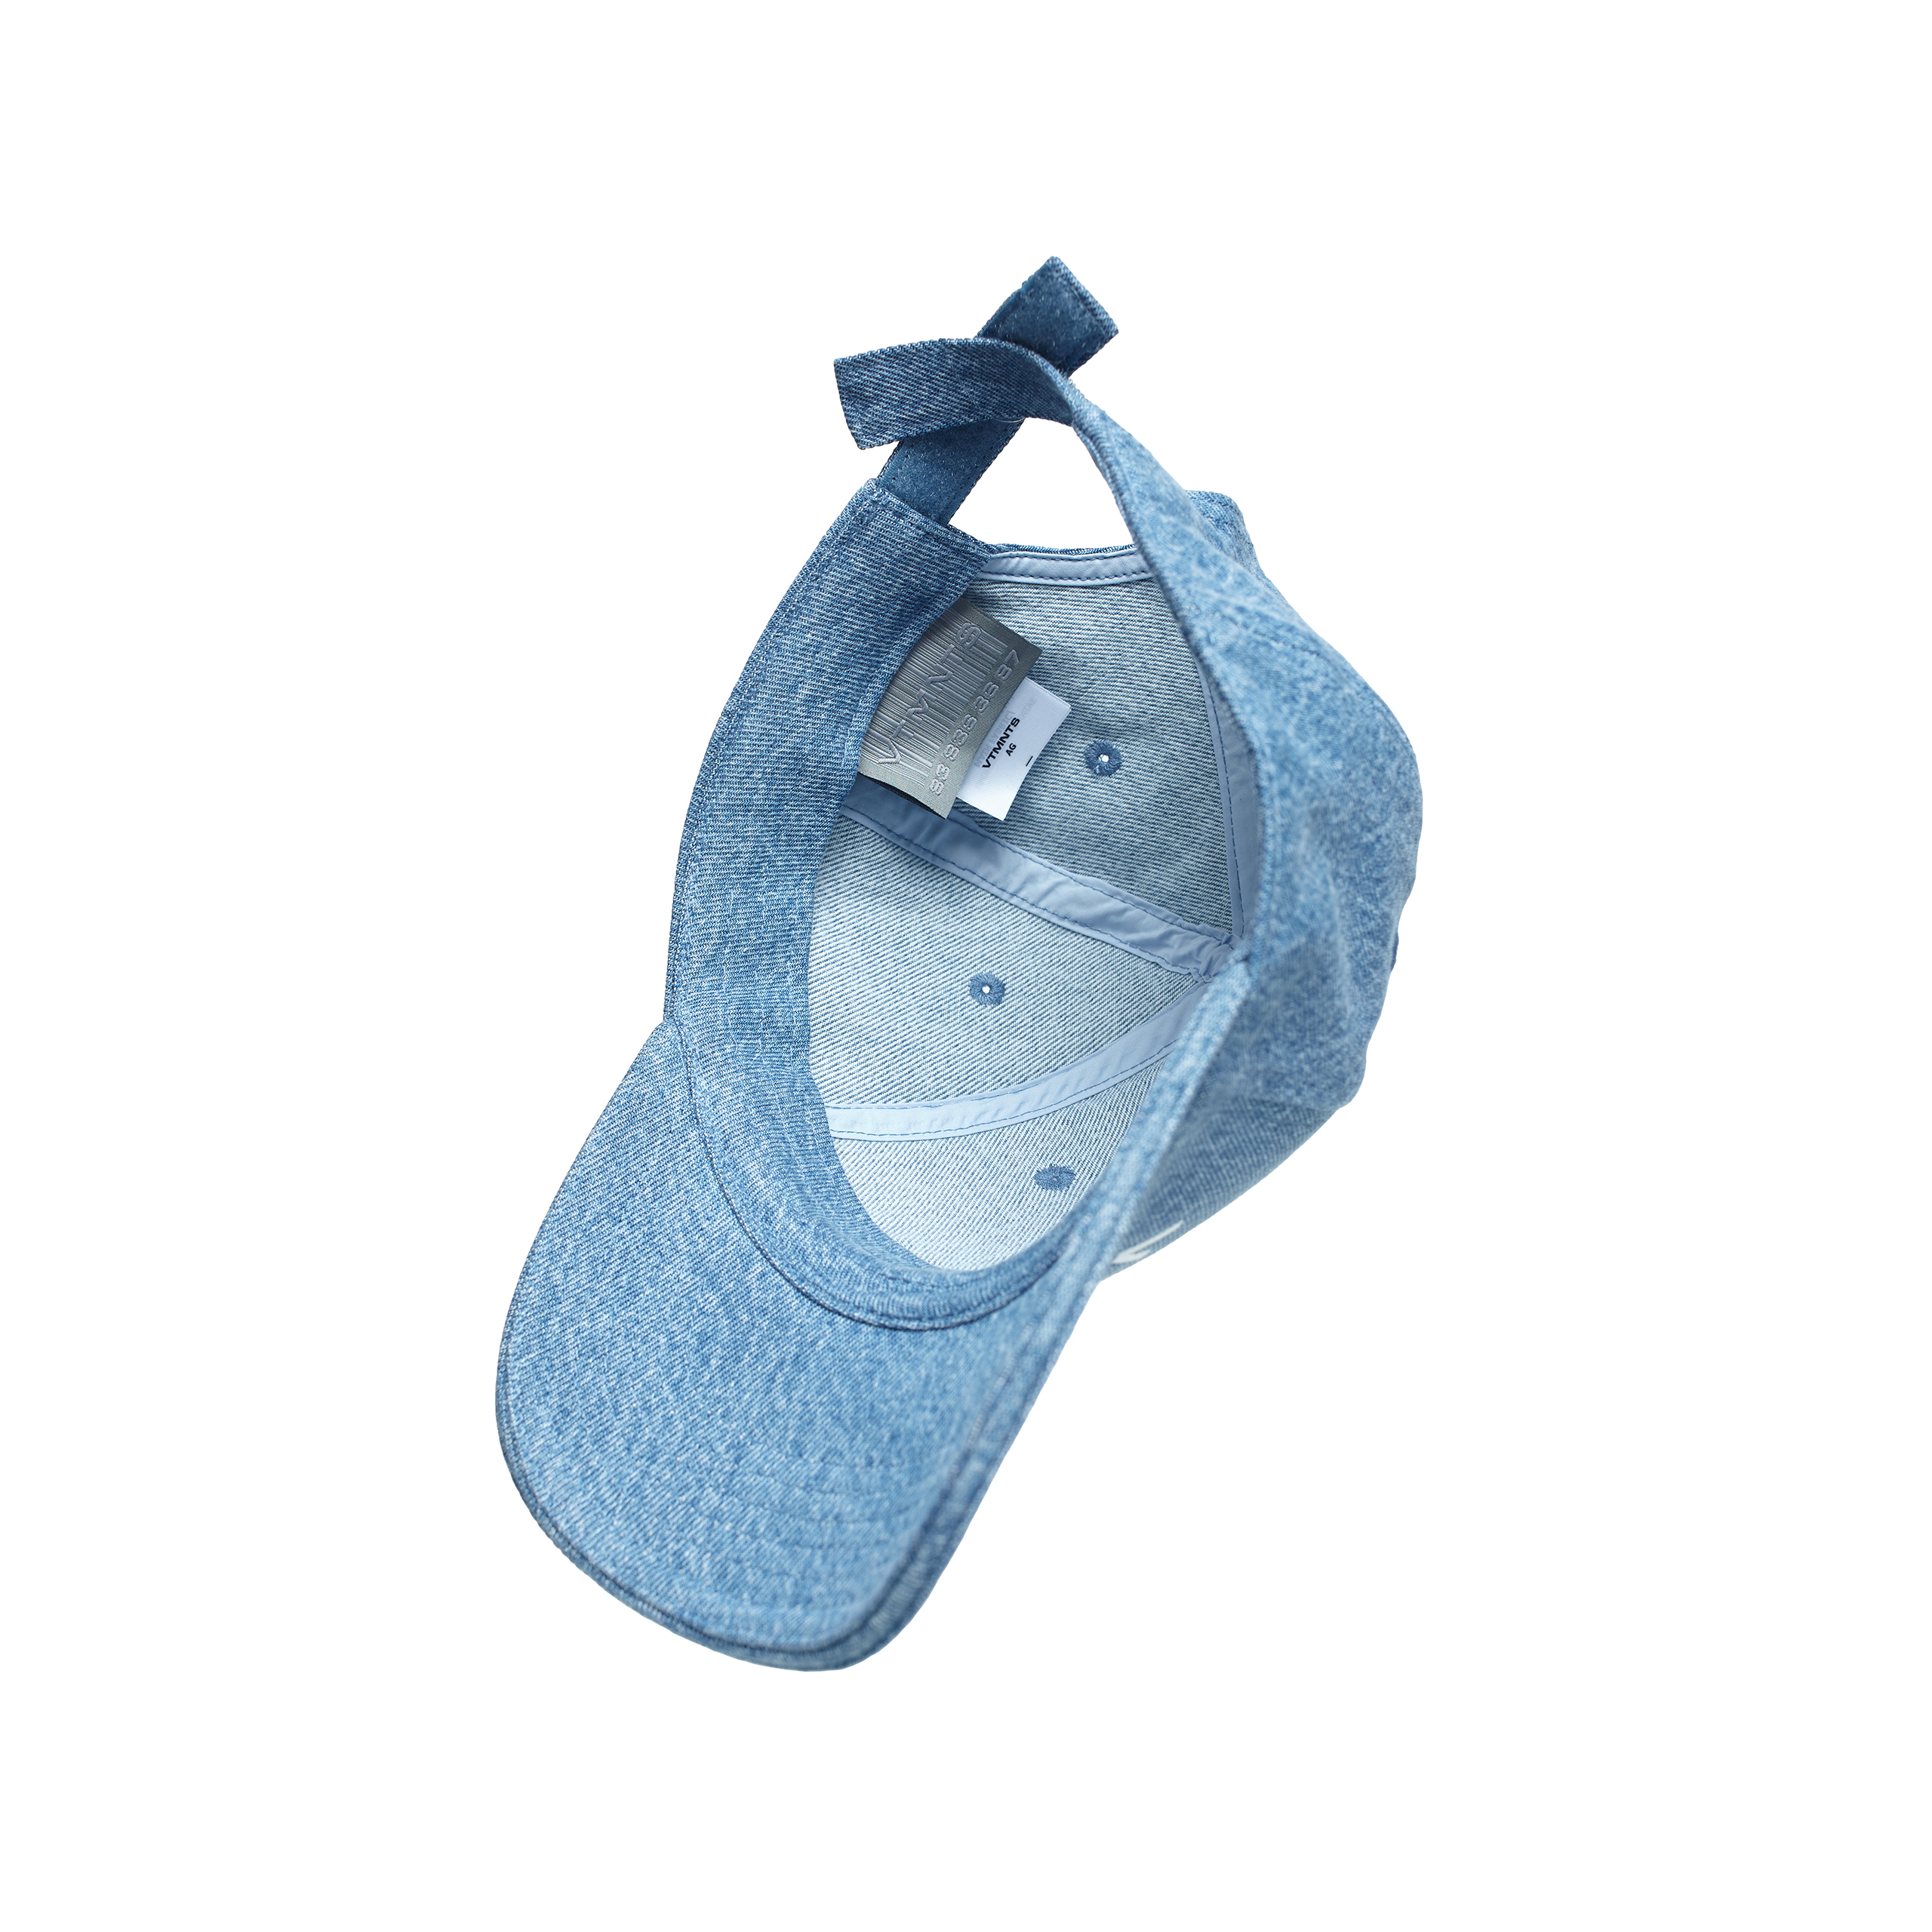 Джинсовая кепка с вышивкой логотипа VTMNTS VL20CA200NW/5401, размер One Size VL20CA200NW/5401 - фото 4